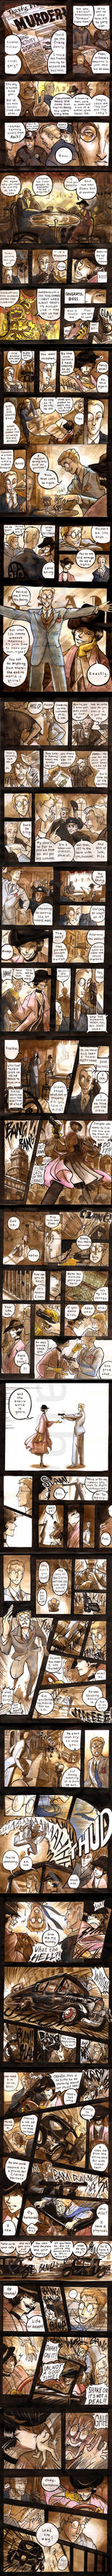 the devil's bartender, pages 1-15